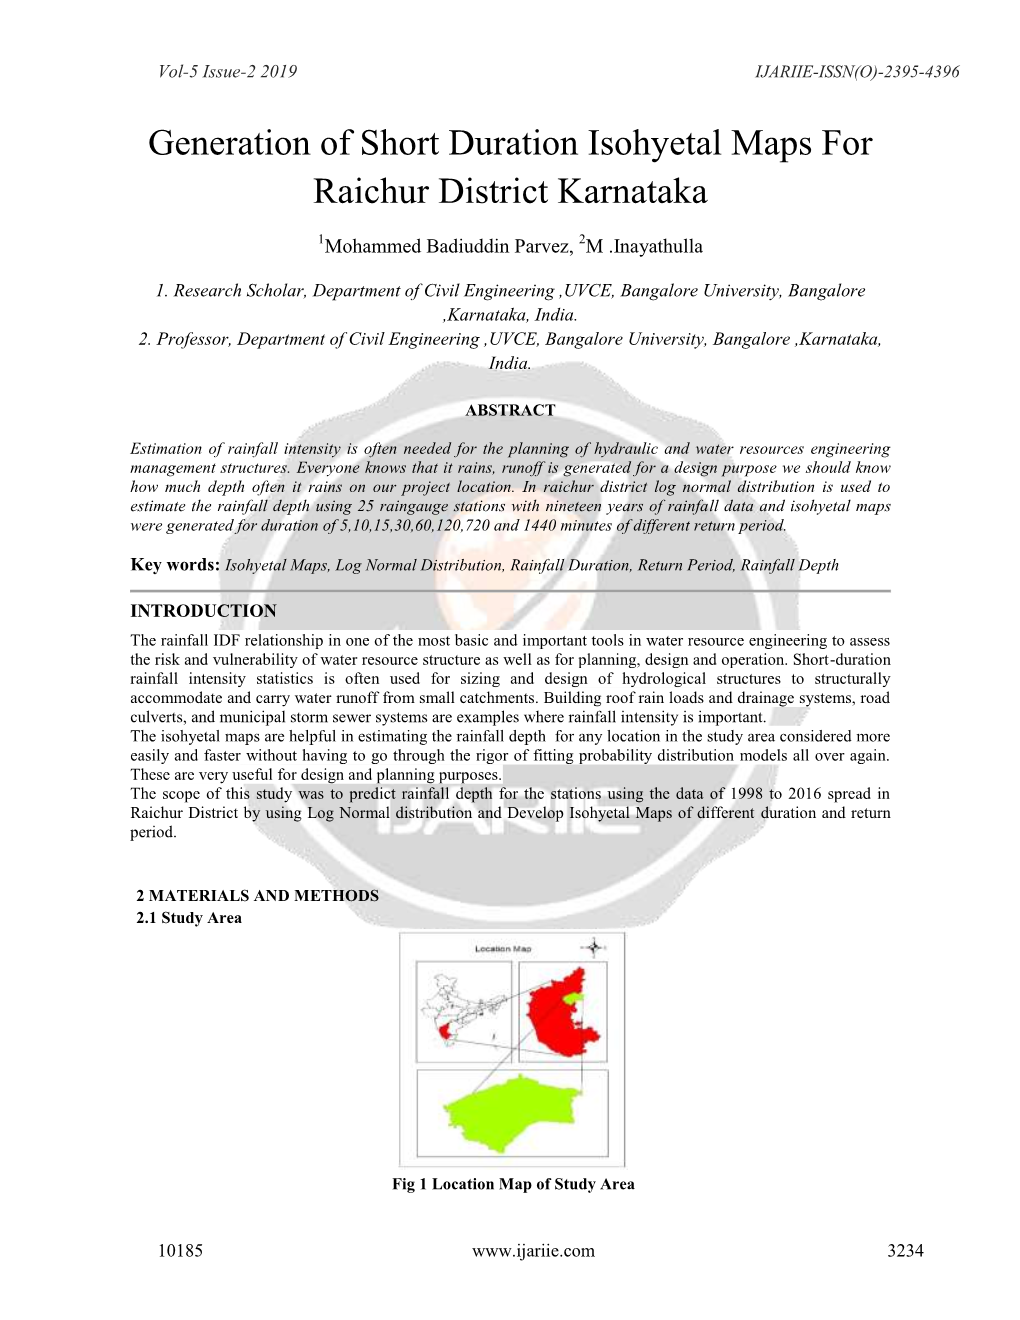 Generation of Short Duration Isohyetal Maps for Raichur District Karnataka